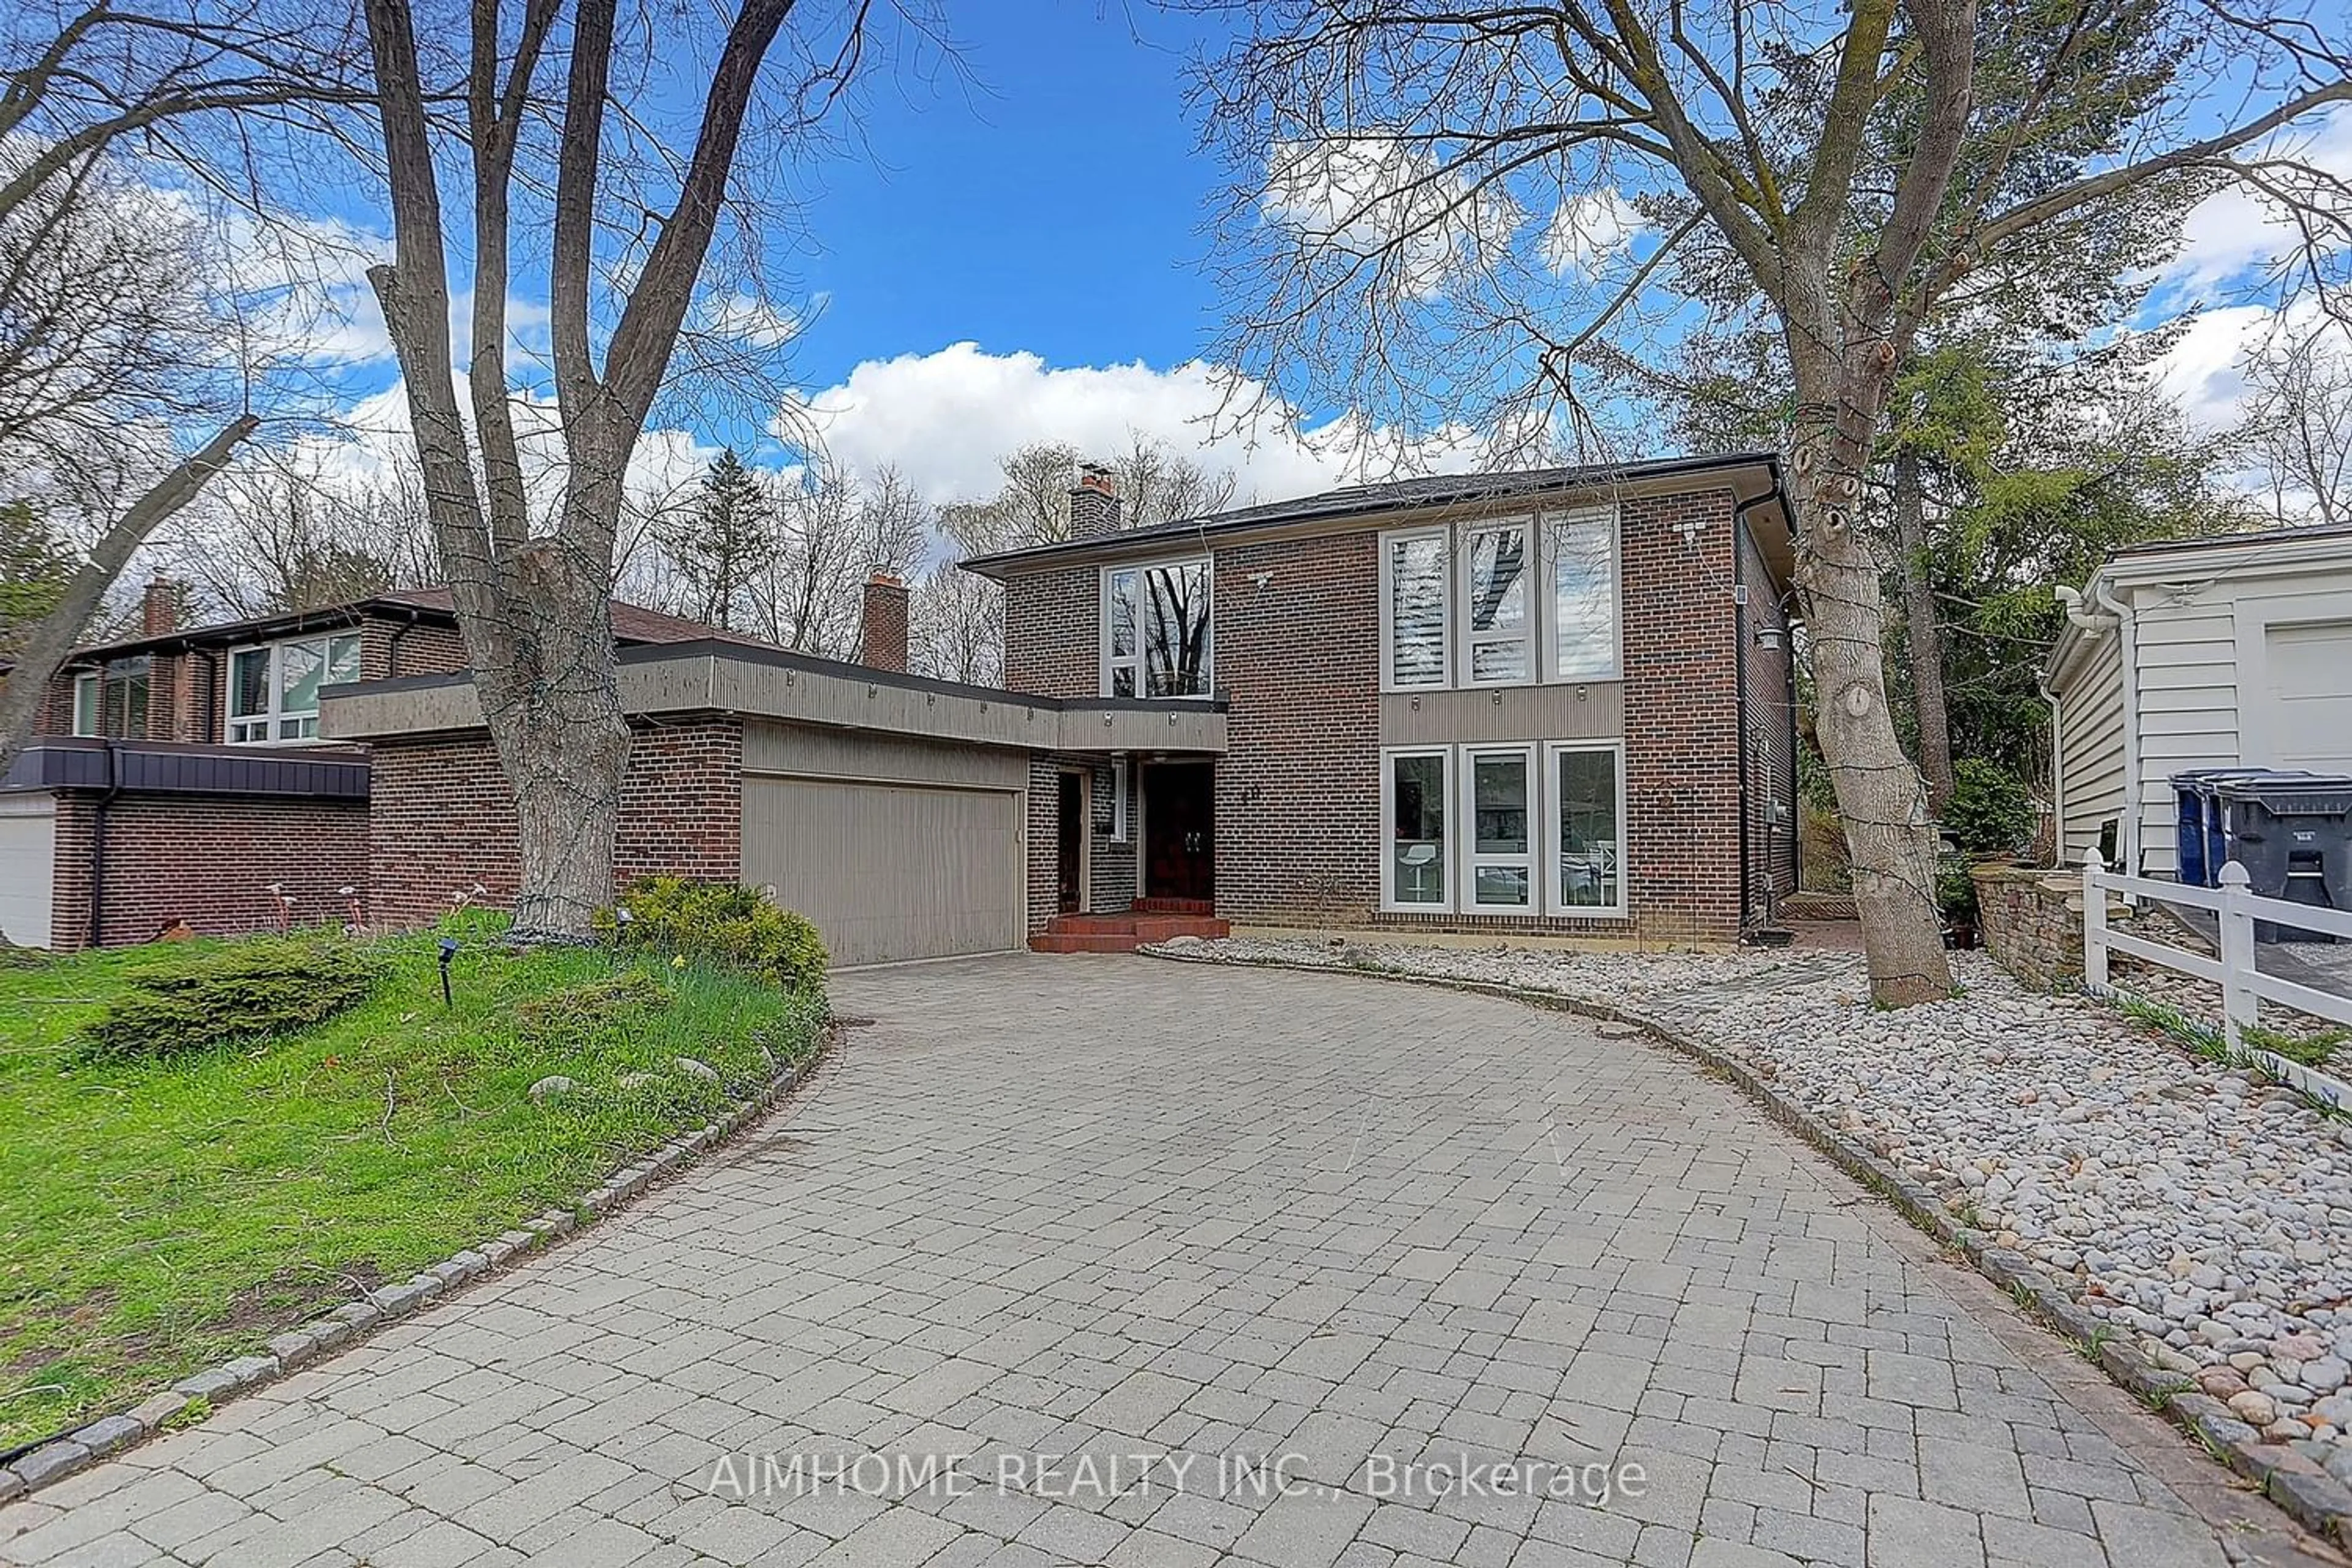 Home with brick exterior material for 40 Beardmore Cres, Toronto Ontario M2K 2P5